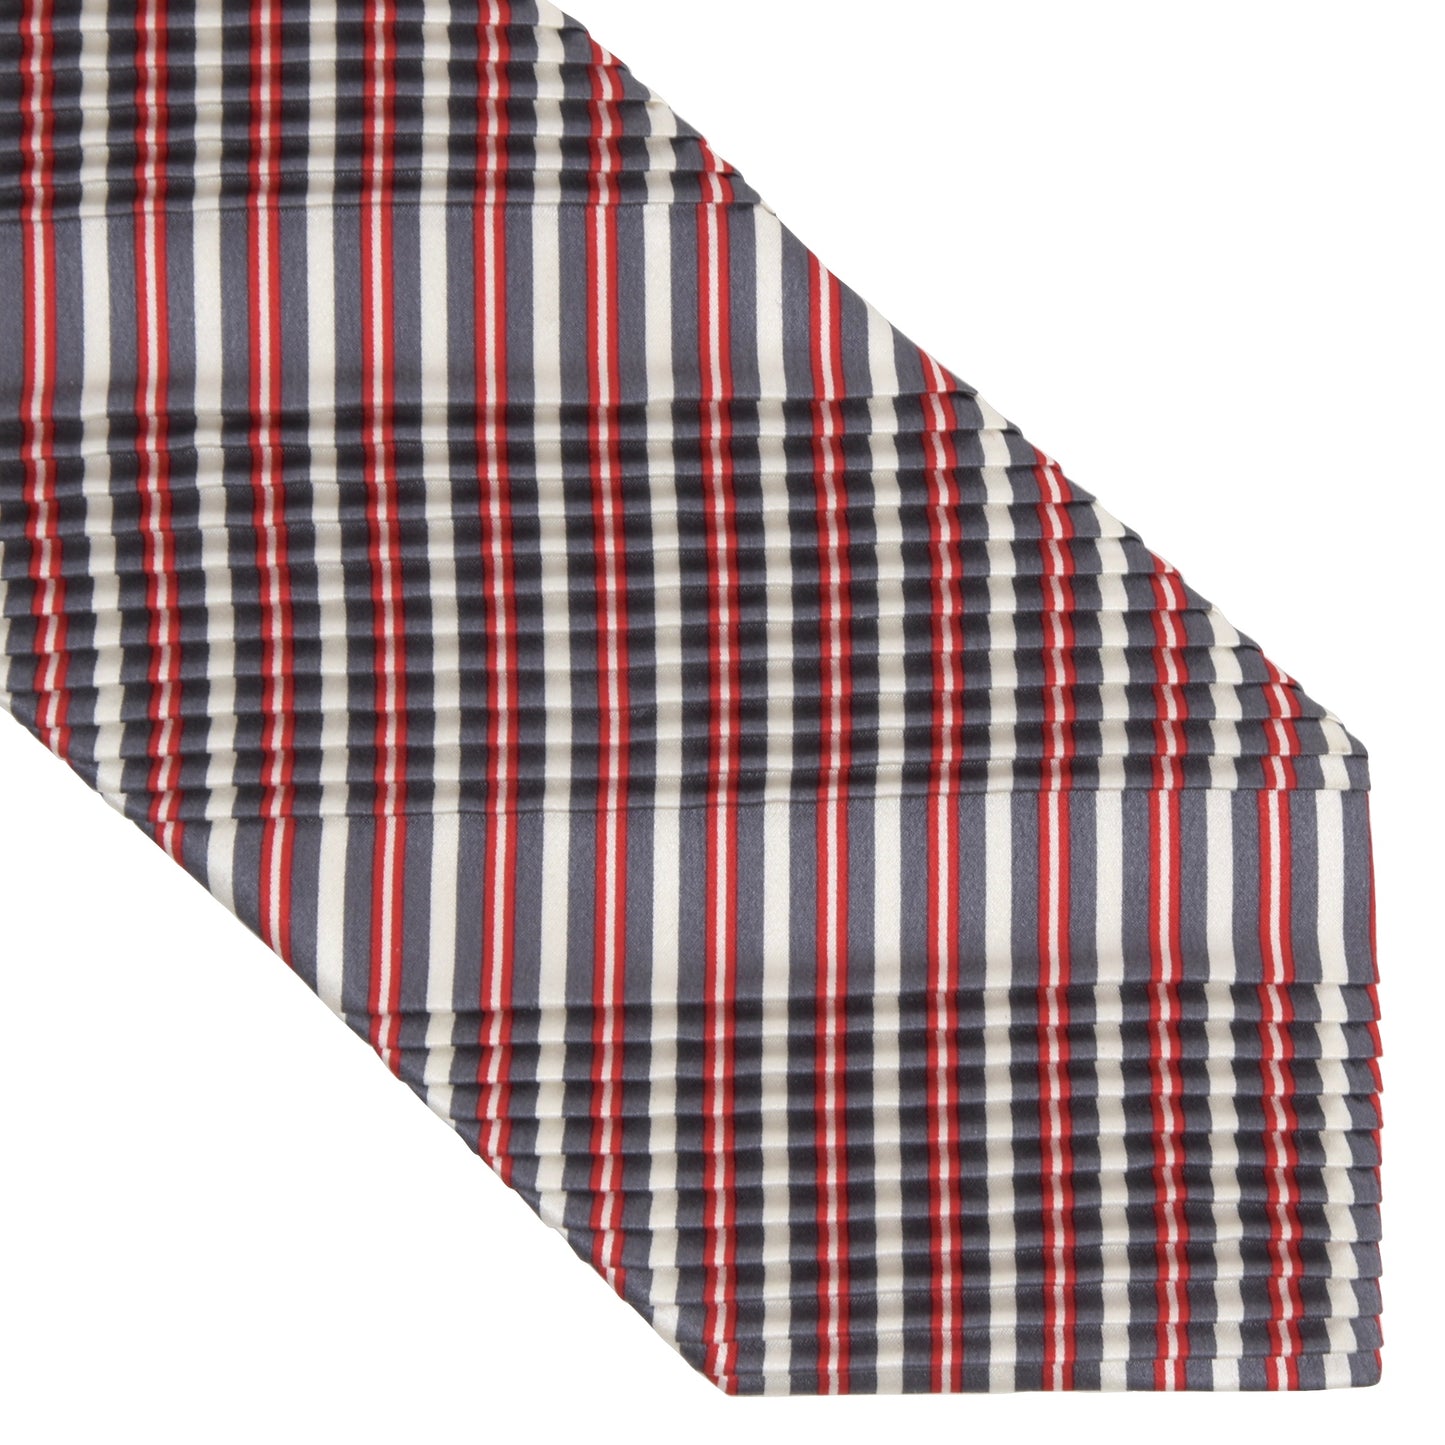 Stefano Ricci Pleated Silk Tie - Stripes